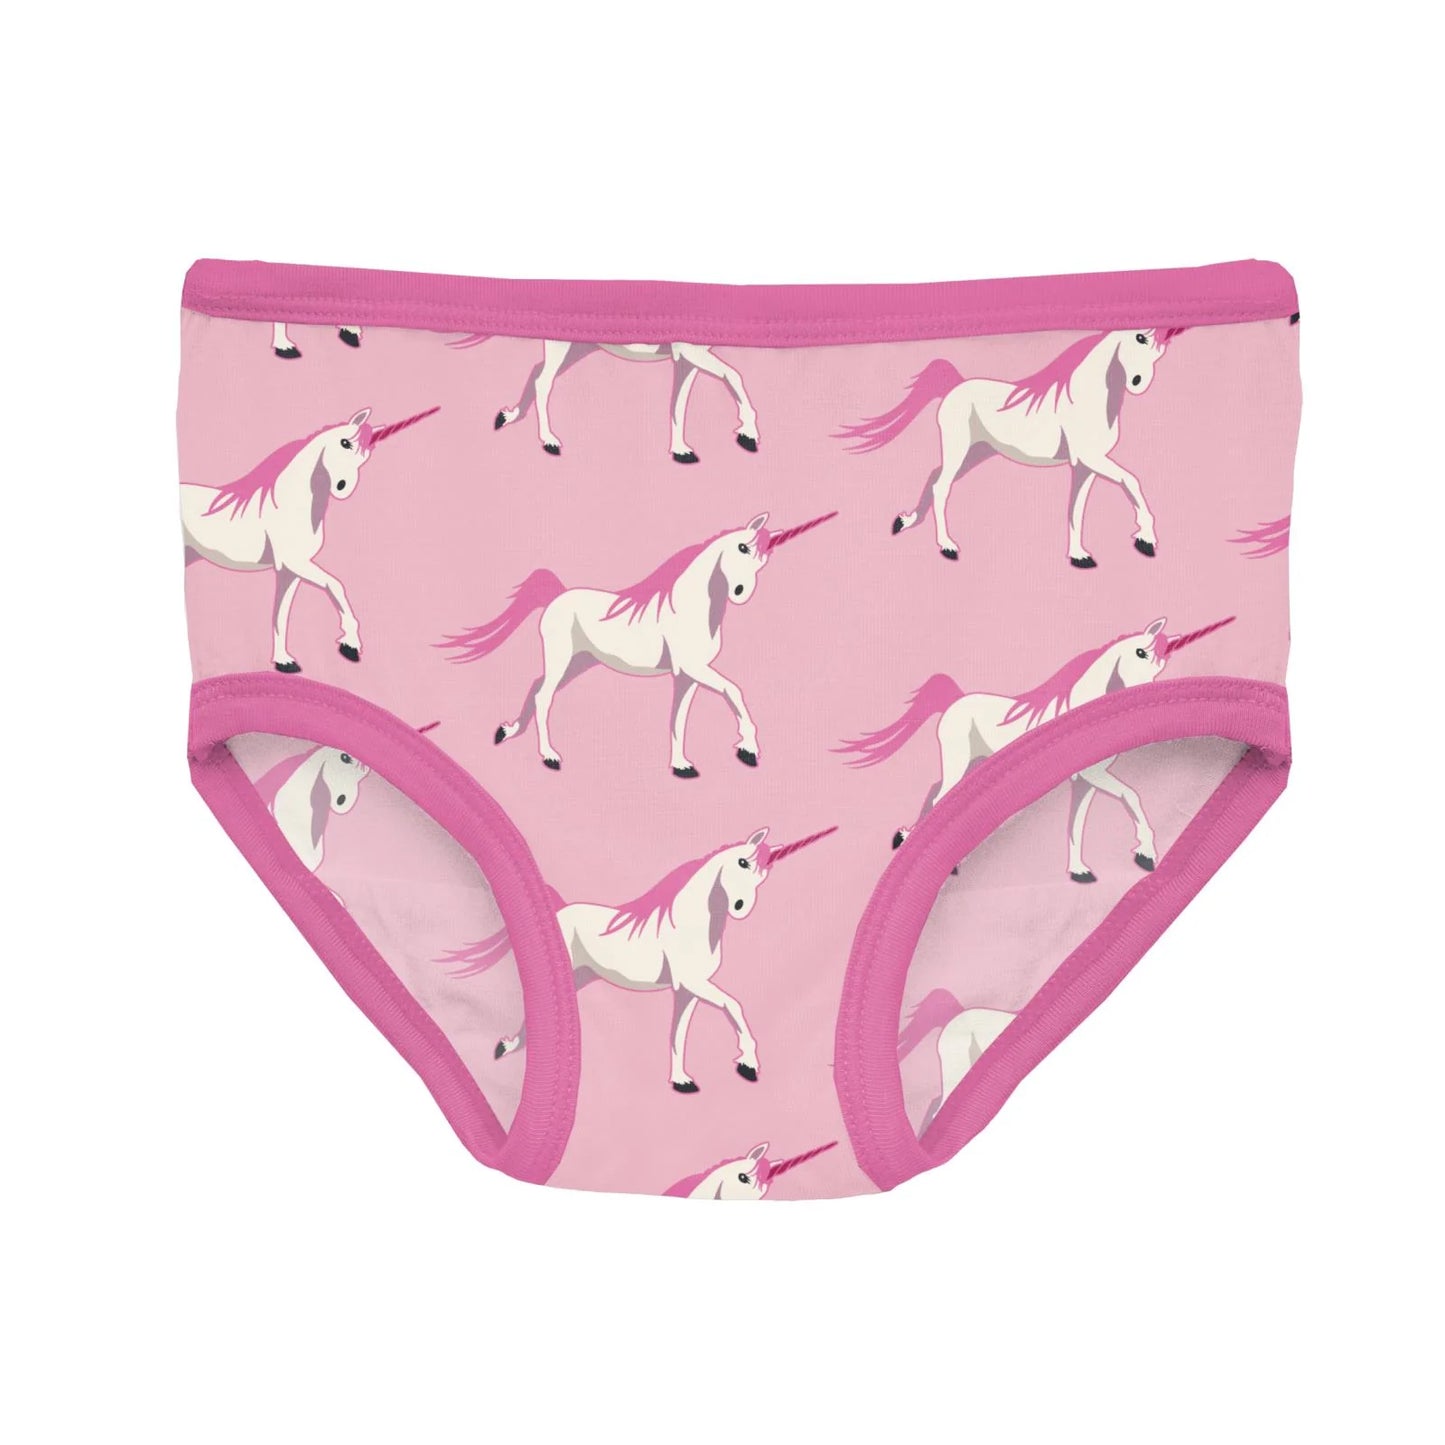 Kickee Cake Pop Prancing Unicorn | Underwear